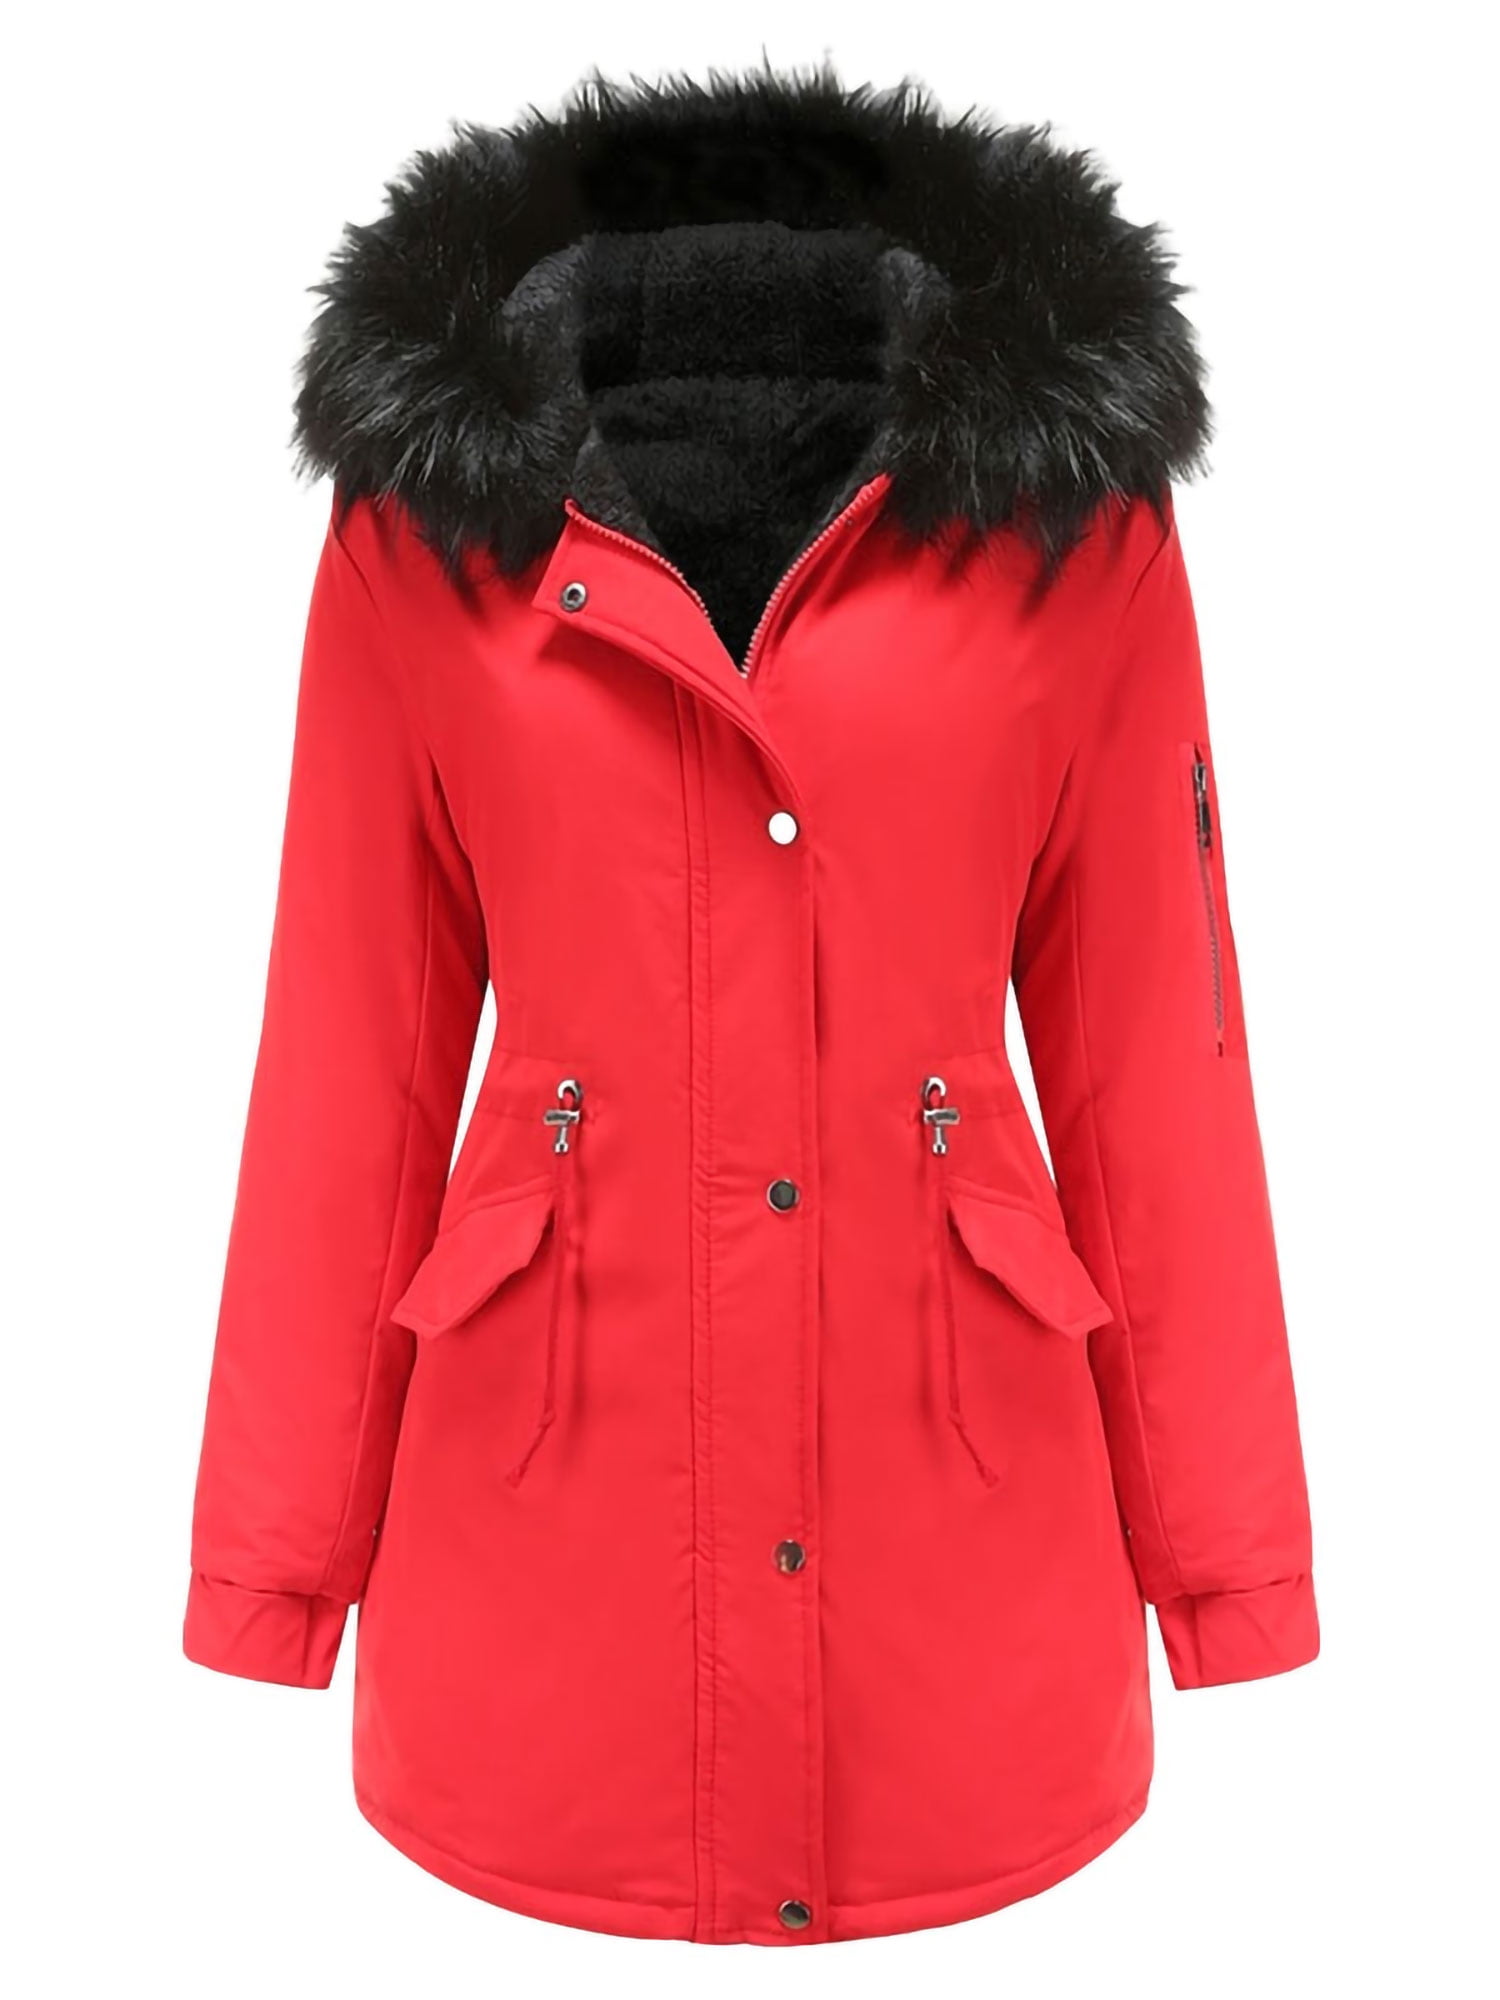 Winter Jacket Hooded Waterproof Thick Warm Parka Coat Casual Winter Red Parka Jacket,Black,L 